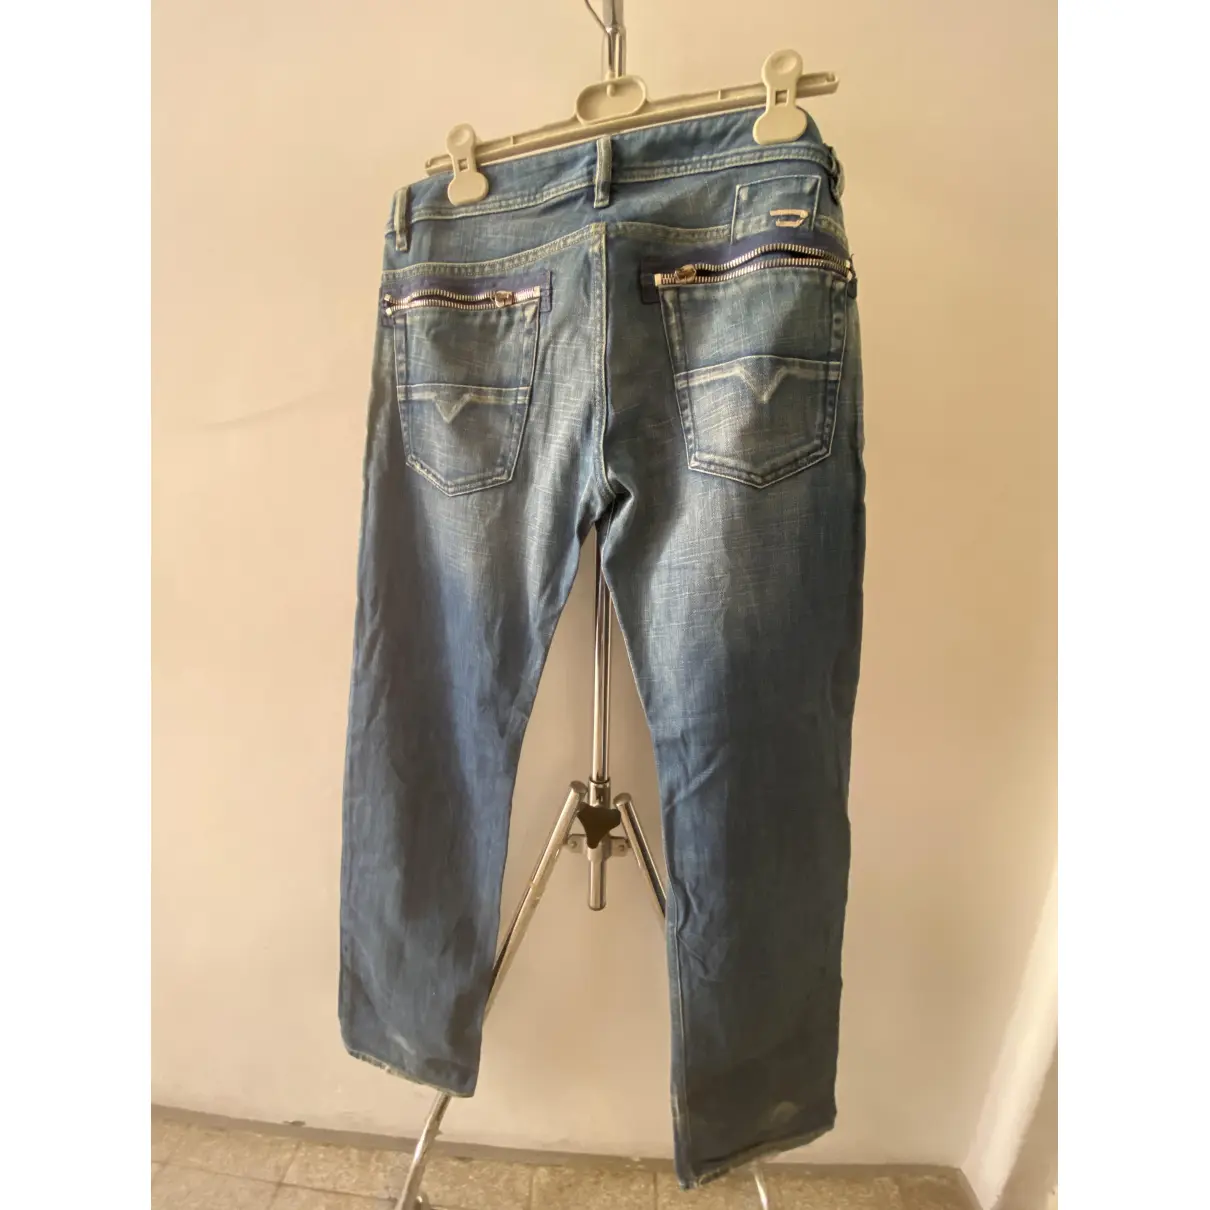 Buy Diesel Blue Cotton Jeans online